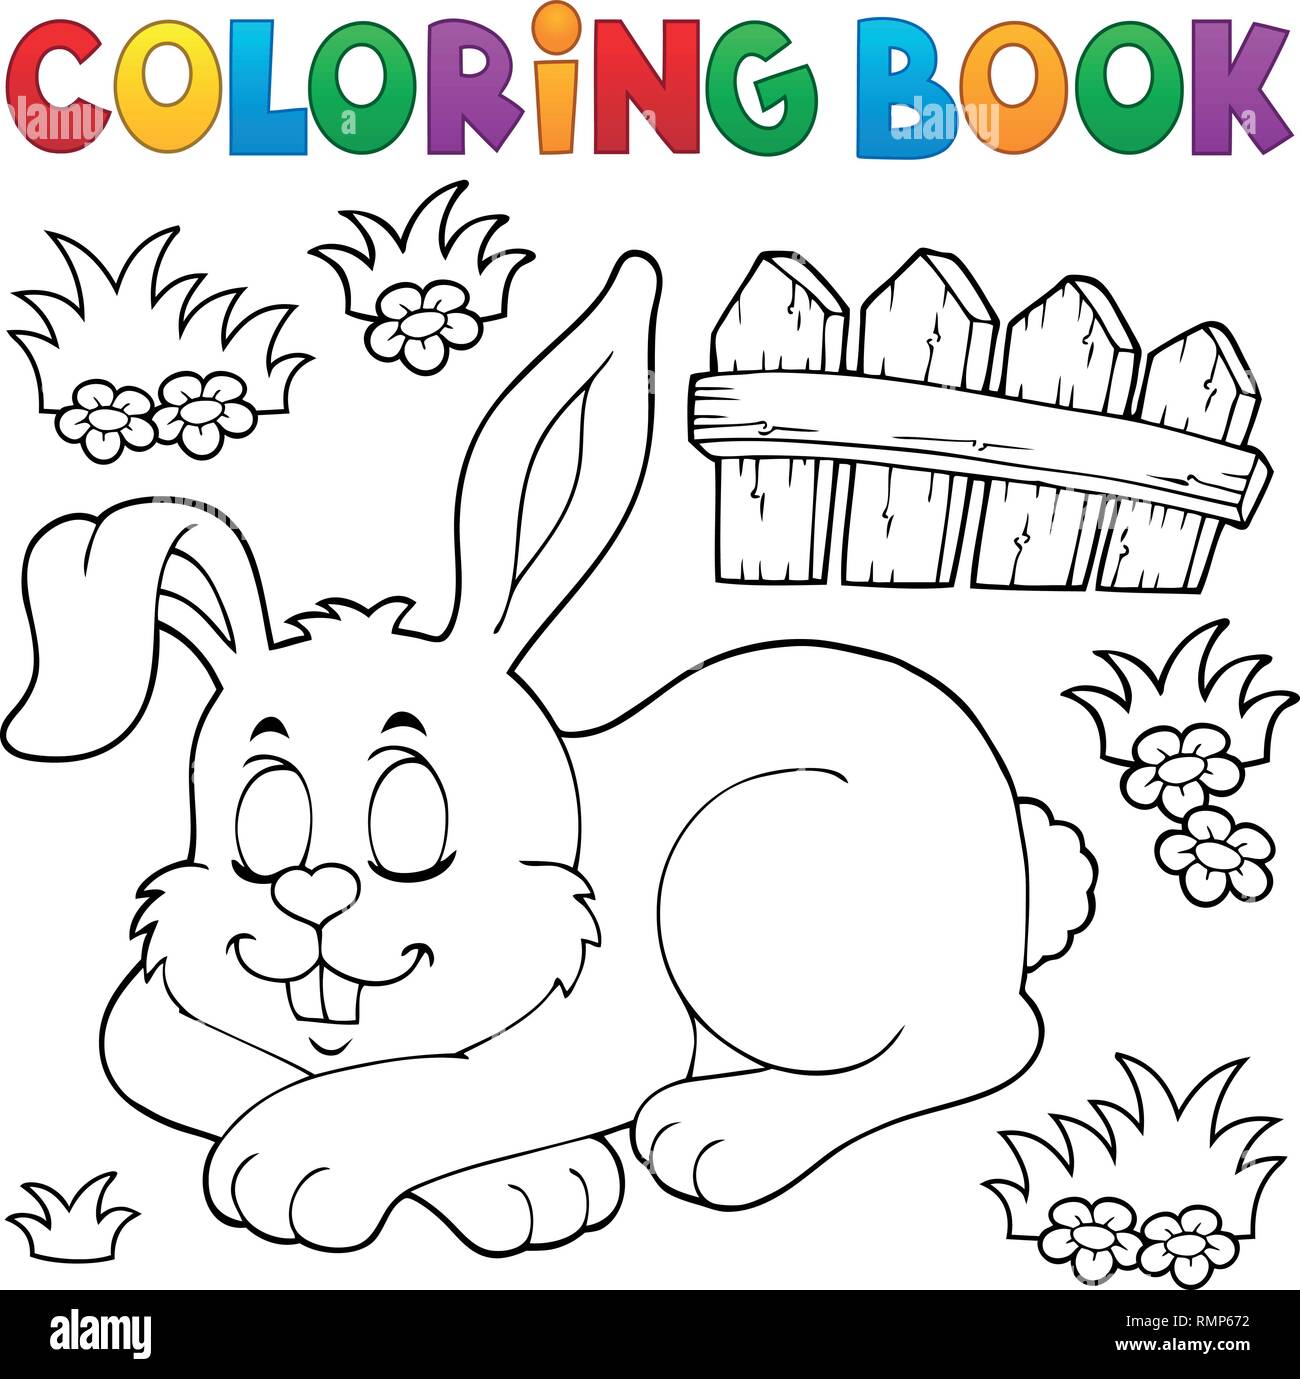 Coloring book sleeping bunny theme 1 - eps10 vector illustration. Stock Vector